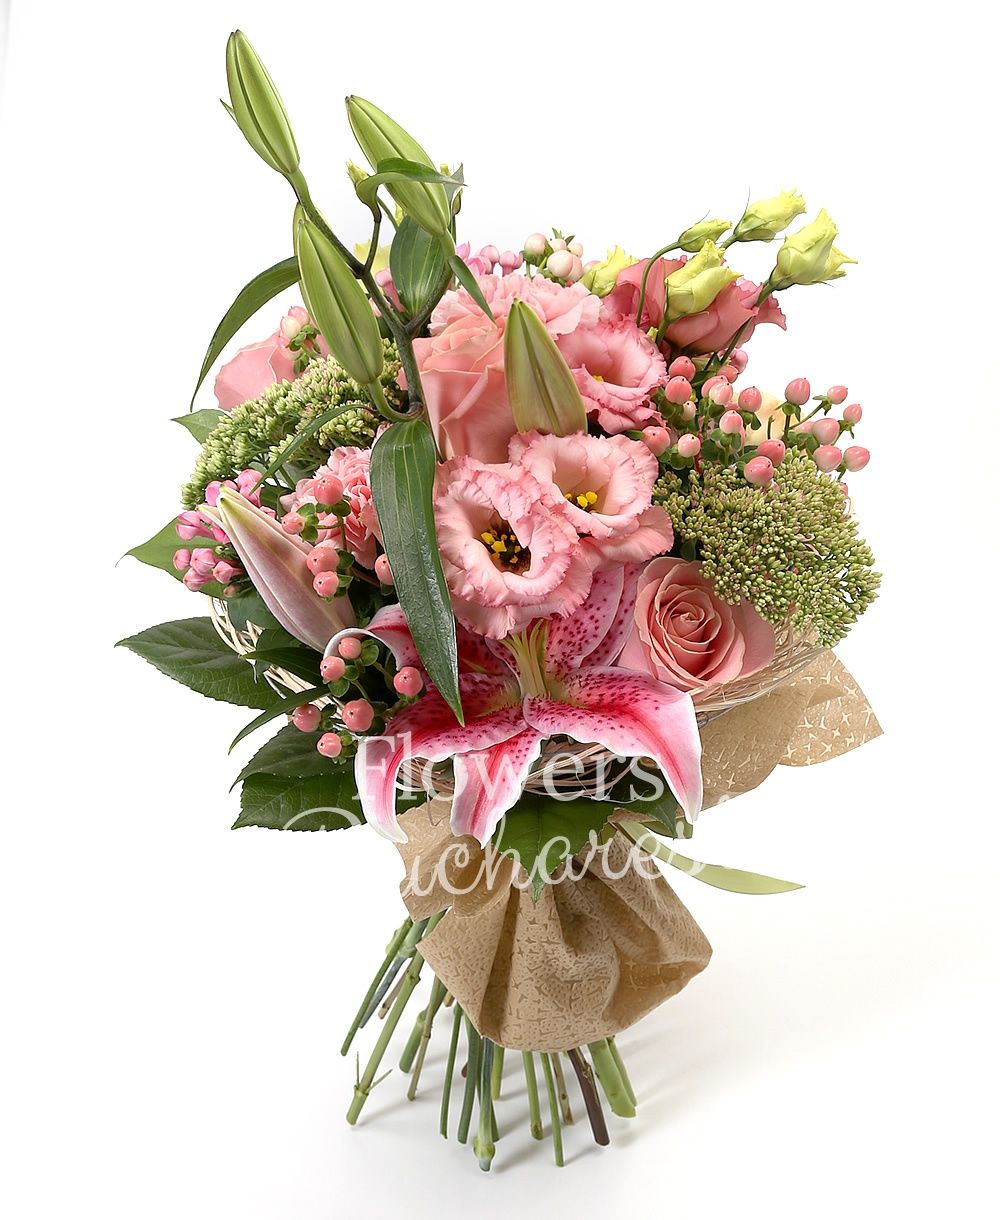 1 pink lily, 3 pink roses, 3 pink lisianthus, 5 pink hypericum, 3 pink bouvardia, 3 pink carnations, 2 sedum, greenery